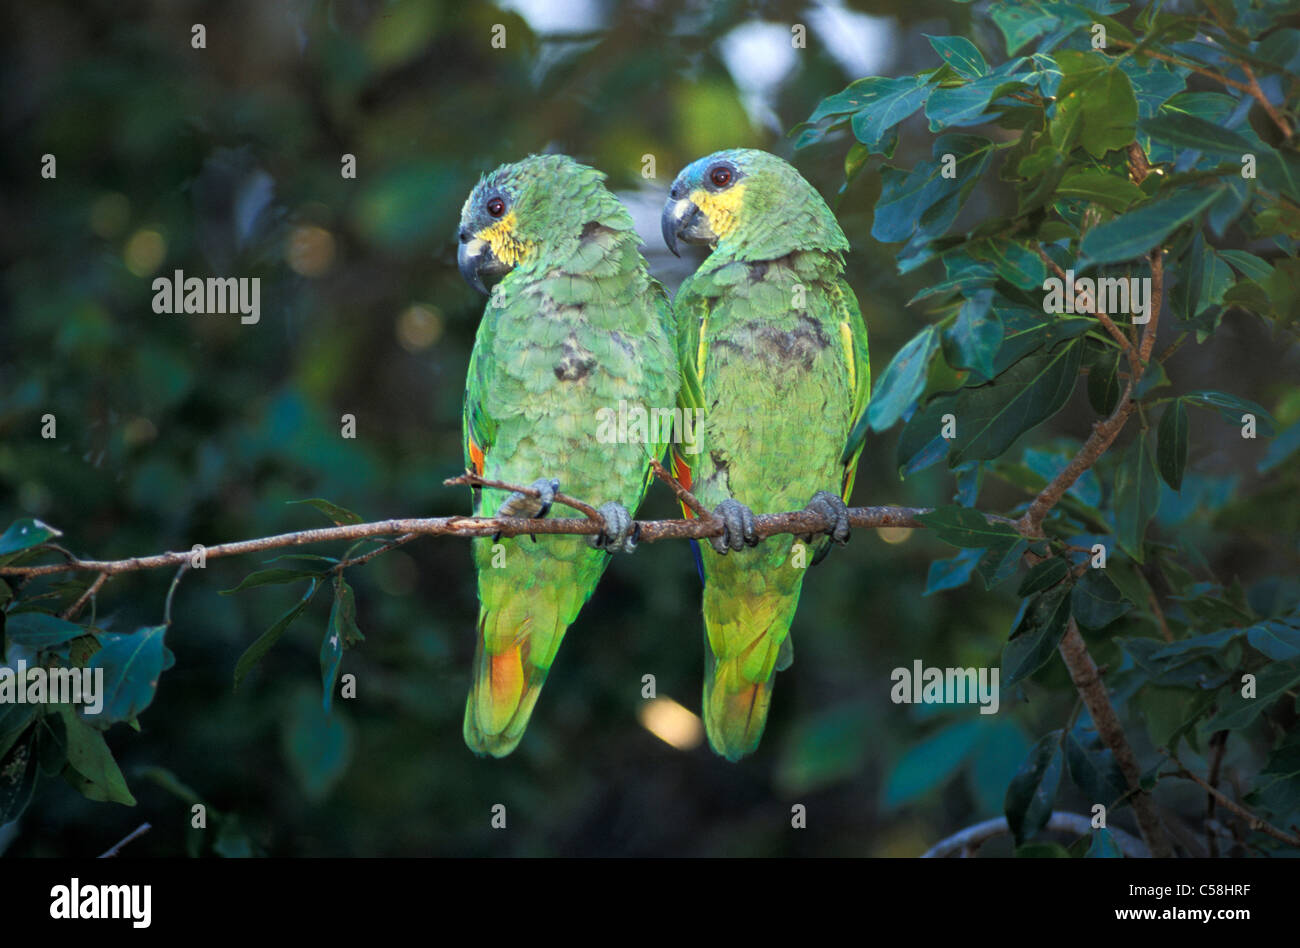 Parakeets, parrot, green, bird, tree, Amazonia, Brazil, South America, Stock Photo